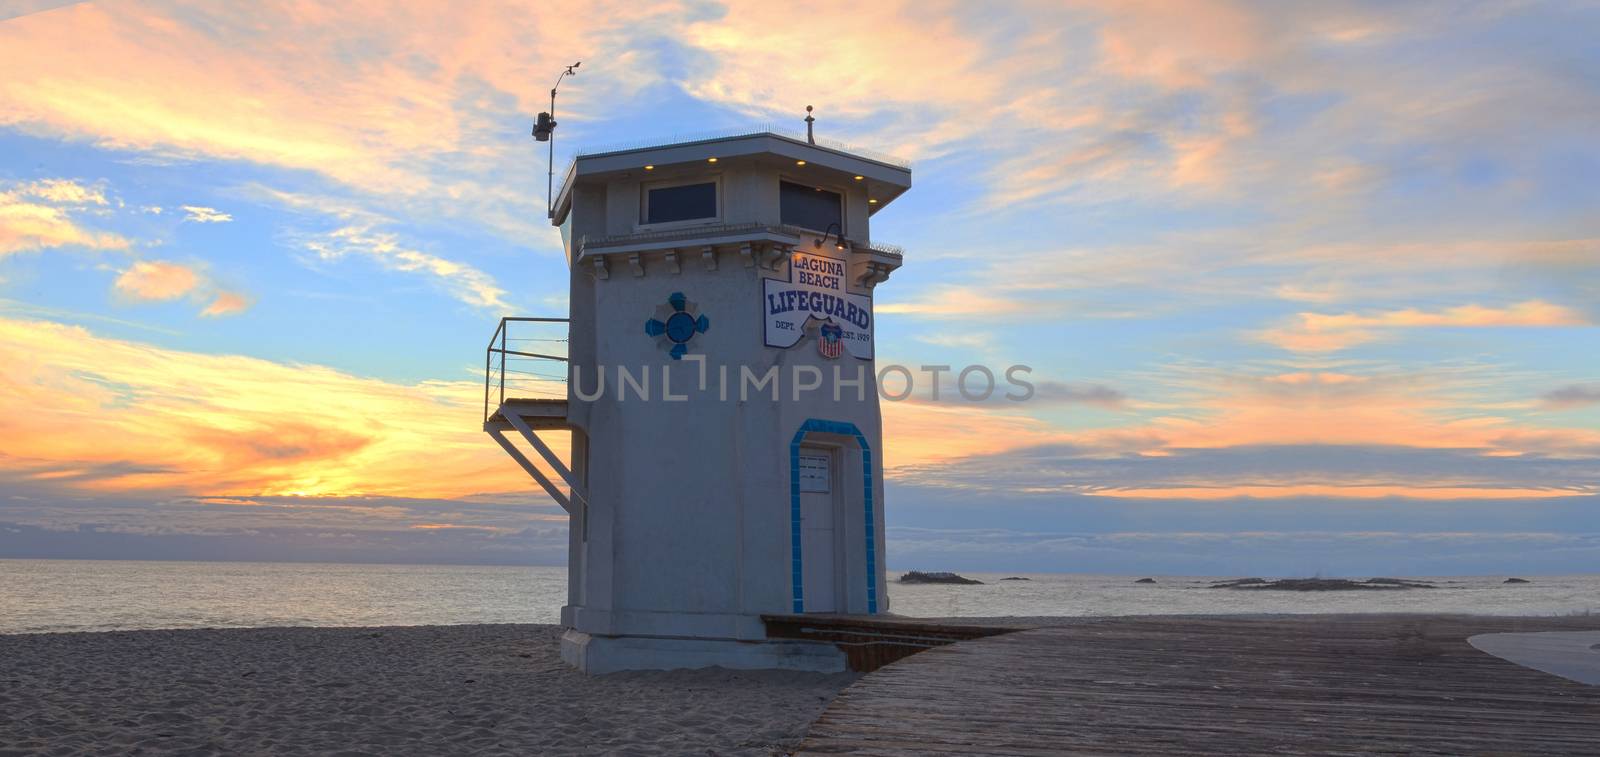 Lifeguard station on boardwalk at Main beach at sunset by steffstarr